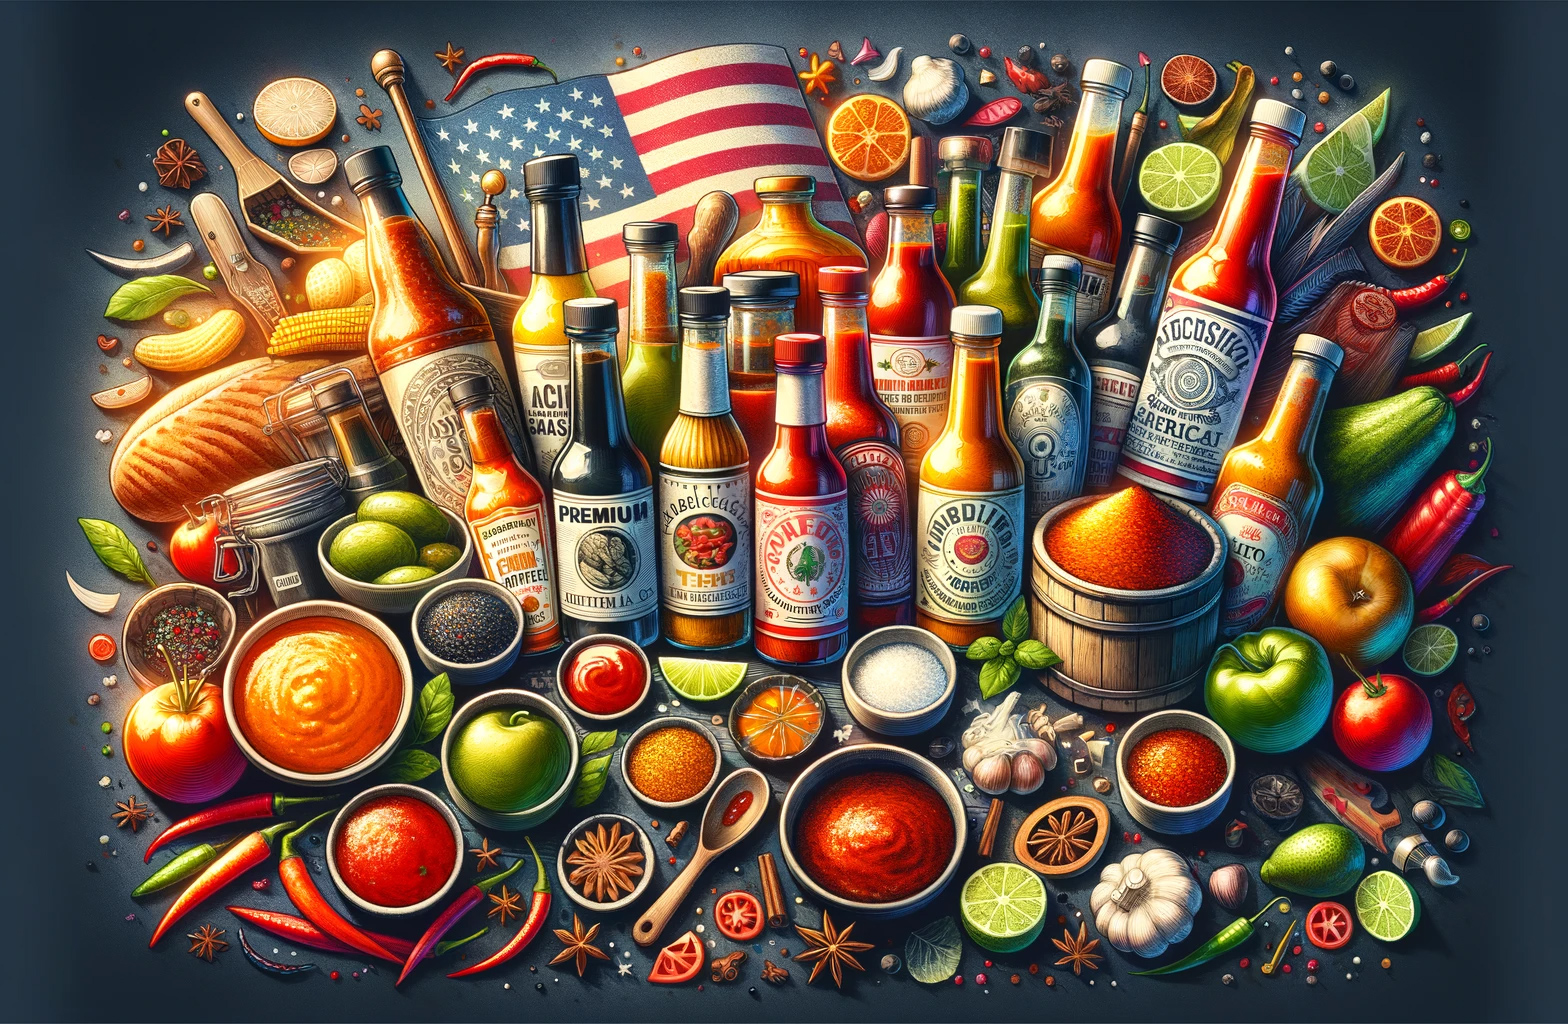 Exploring America’s Diverse Taste: The Rise of Premium, Ethnic, and Hot Sauces in the U.S. Market